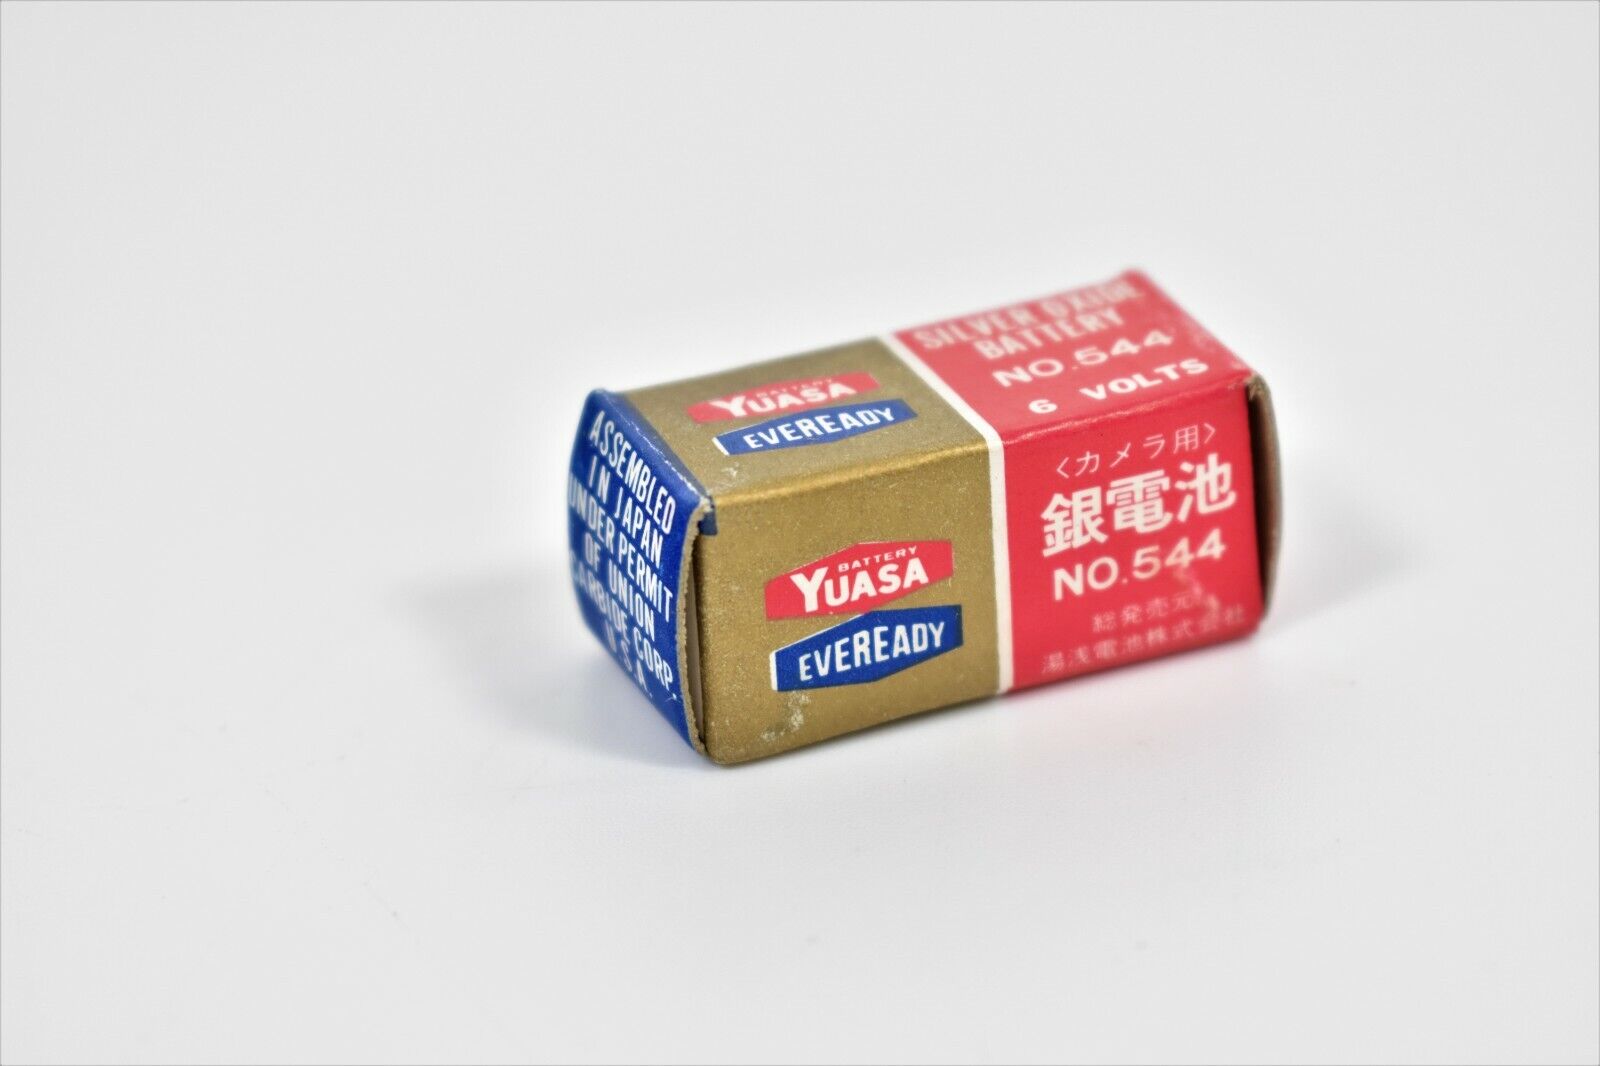 Vintage 1970\'s Yuasa Eveready 6.4 Volt Battery No 544 Empty Original Box Package